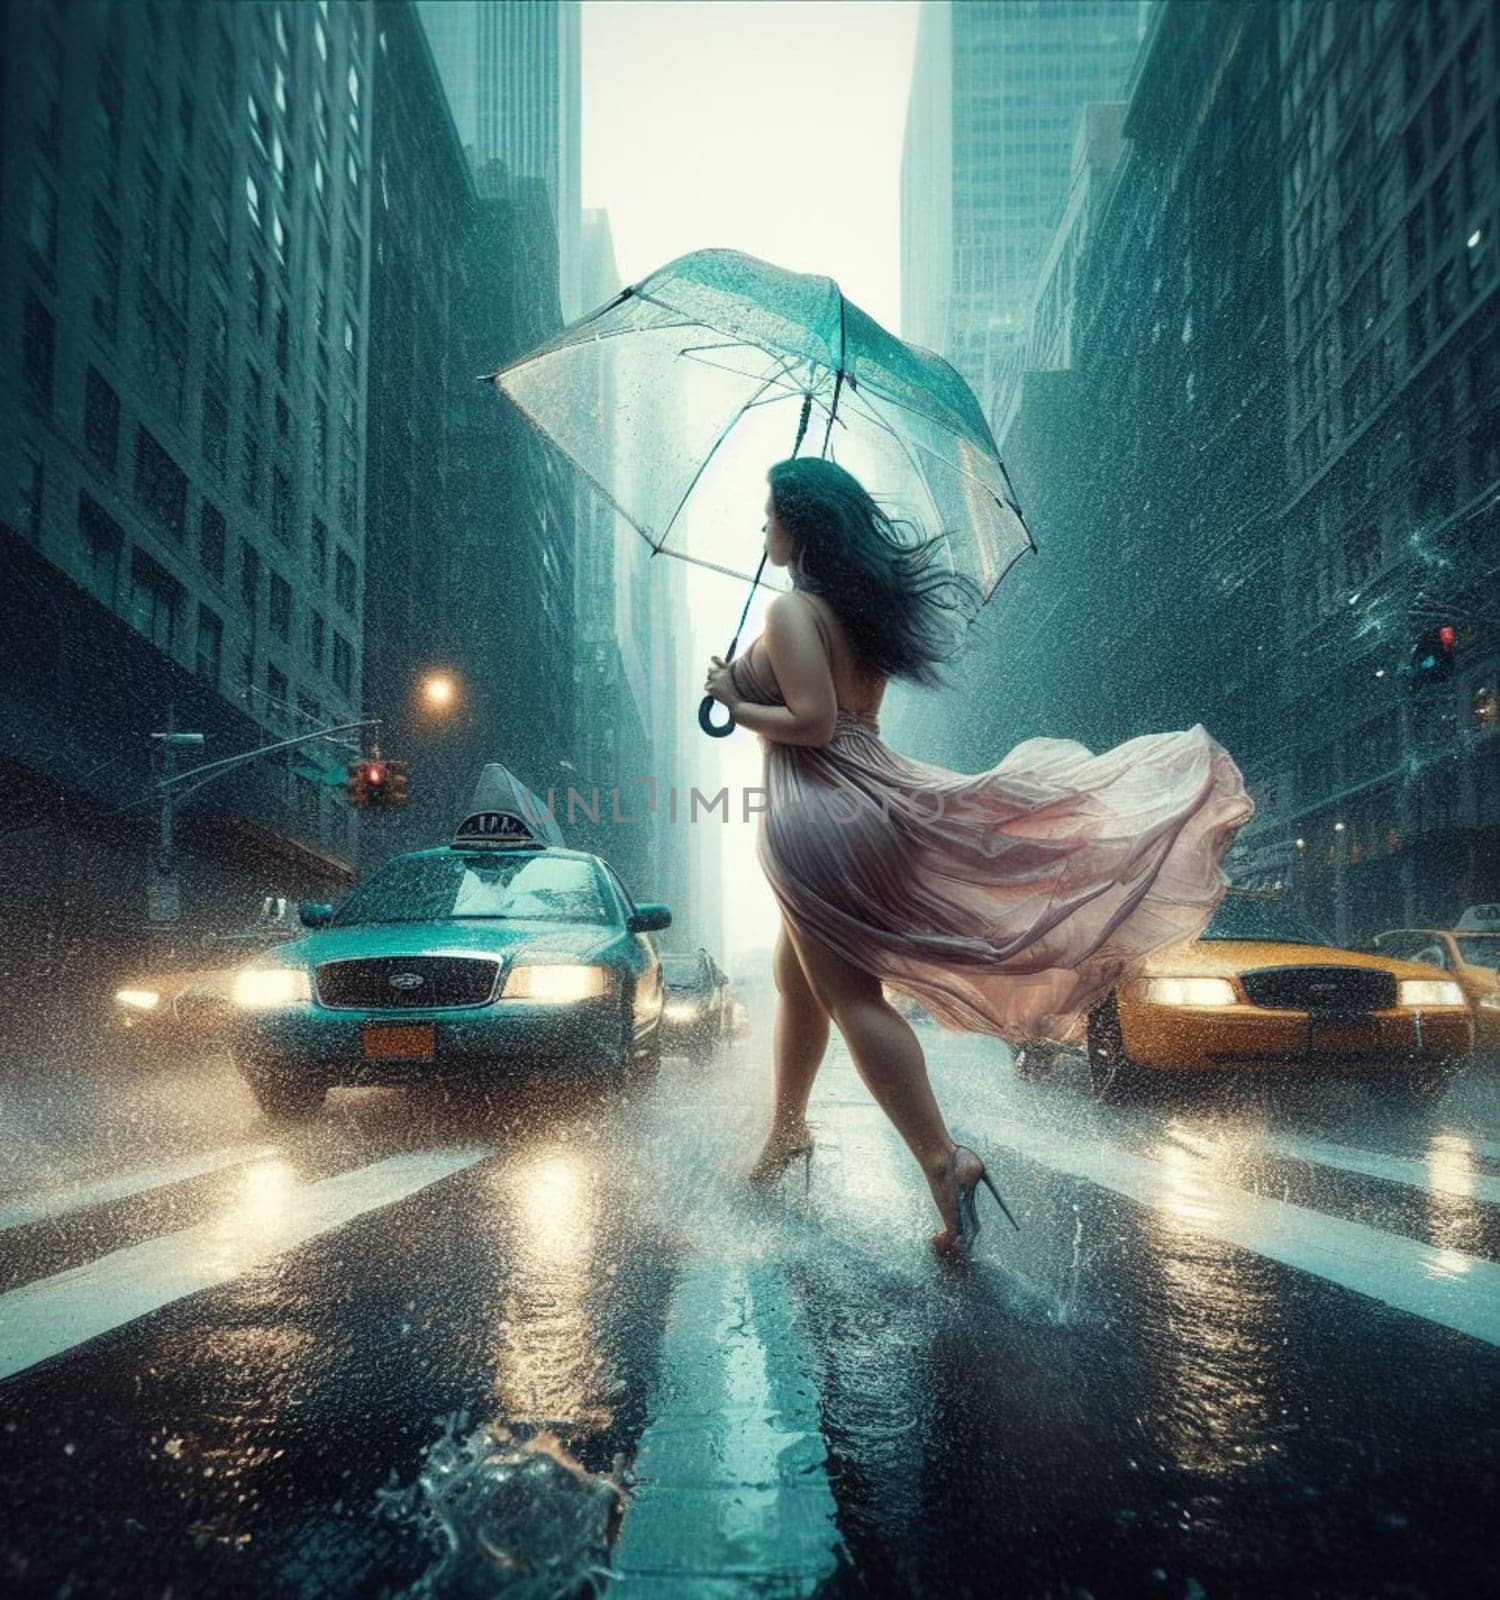 voluptous woman using umbrella joyful wearing a light floral dress under heavy rain in New York City among traffic crossing street painting